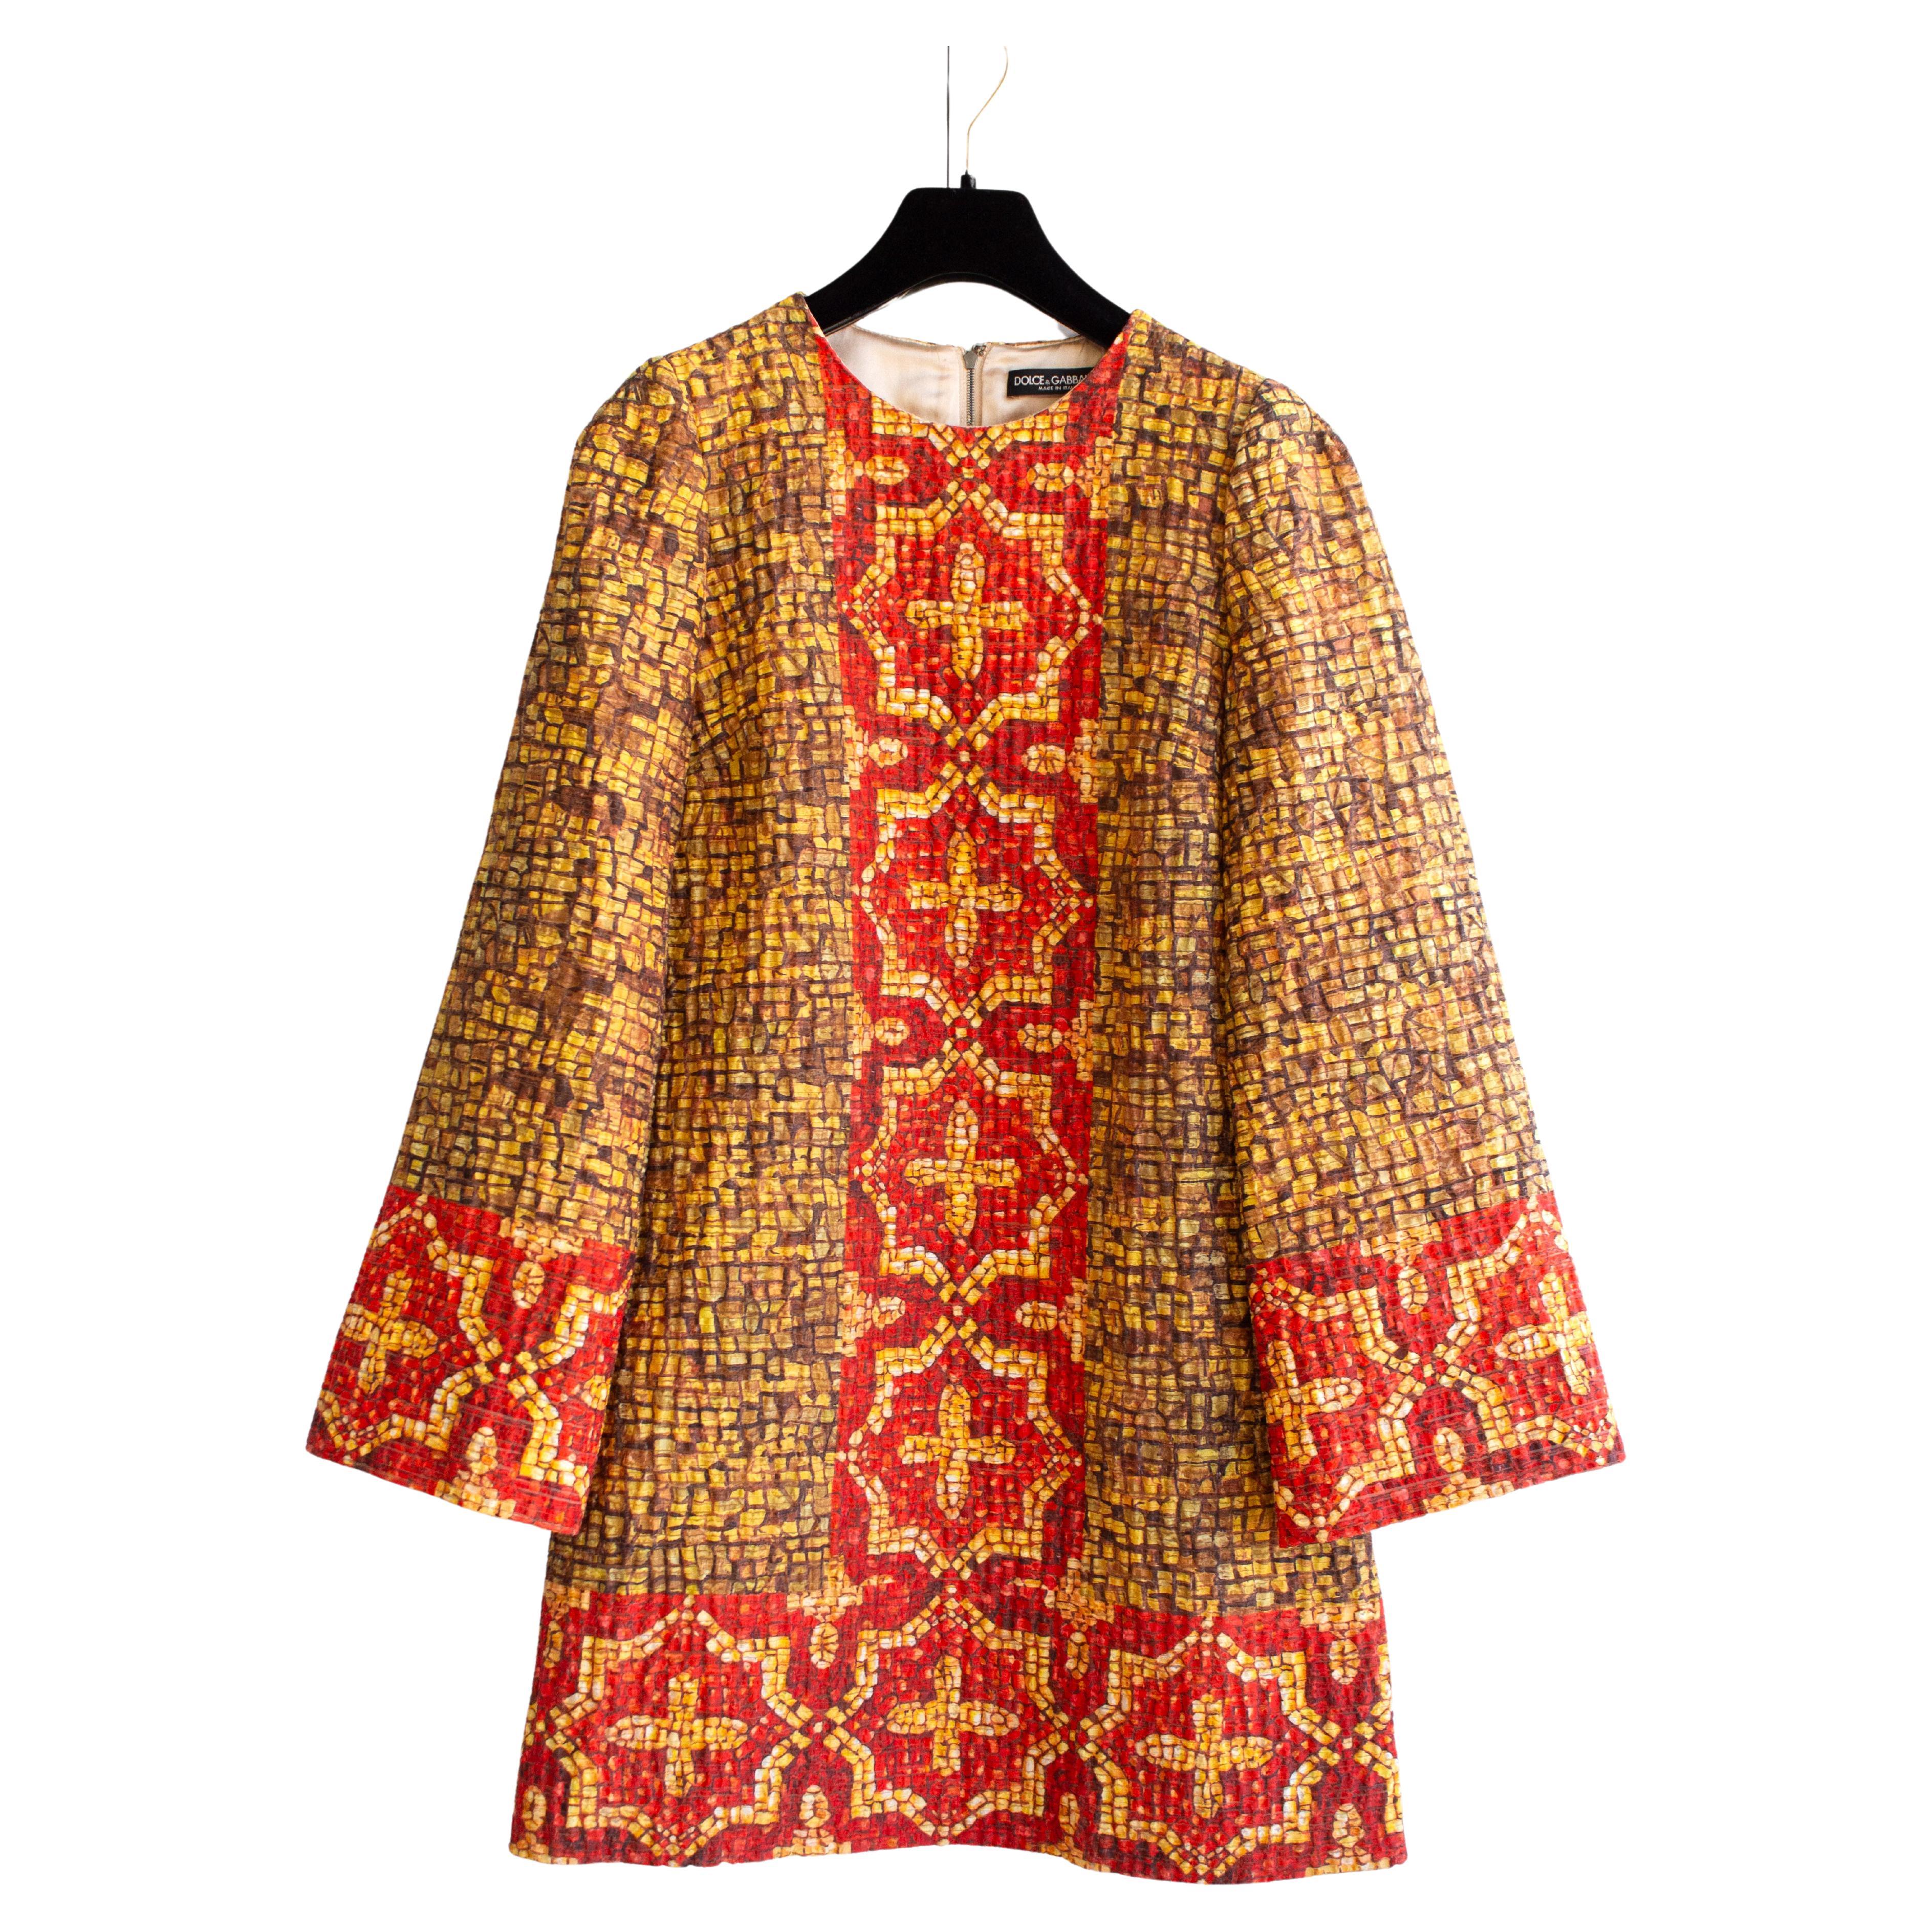 Dolce&Gabbana Fall/Winter 2013 Byzantine Runway Mosaic Gold Red Cross Dress For Sale